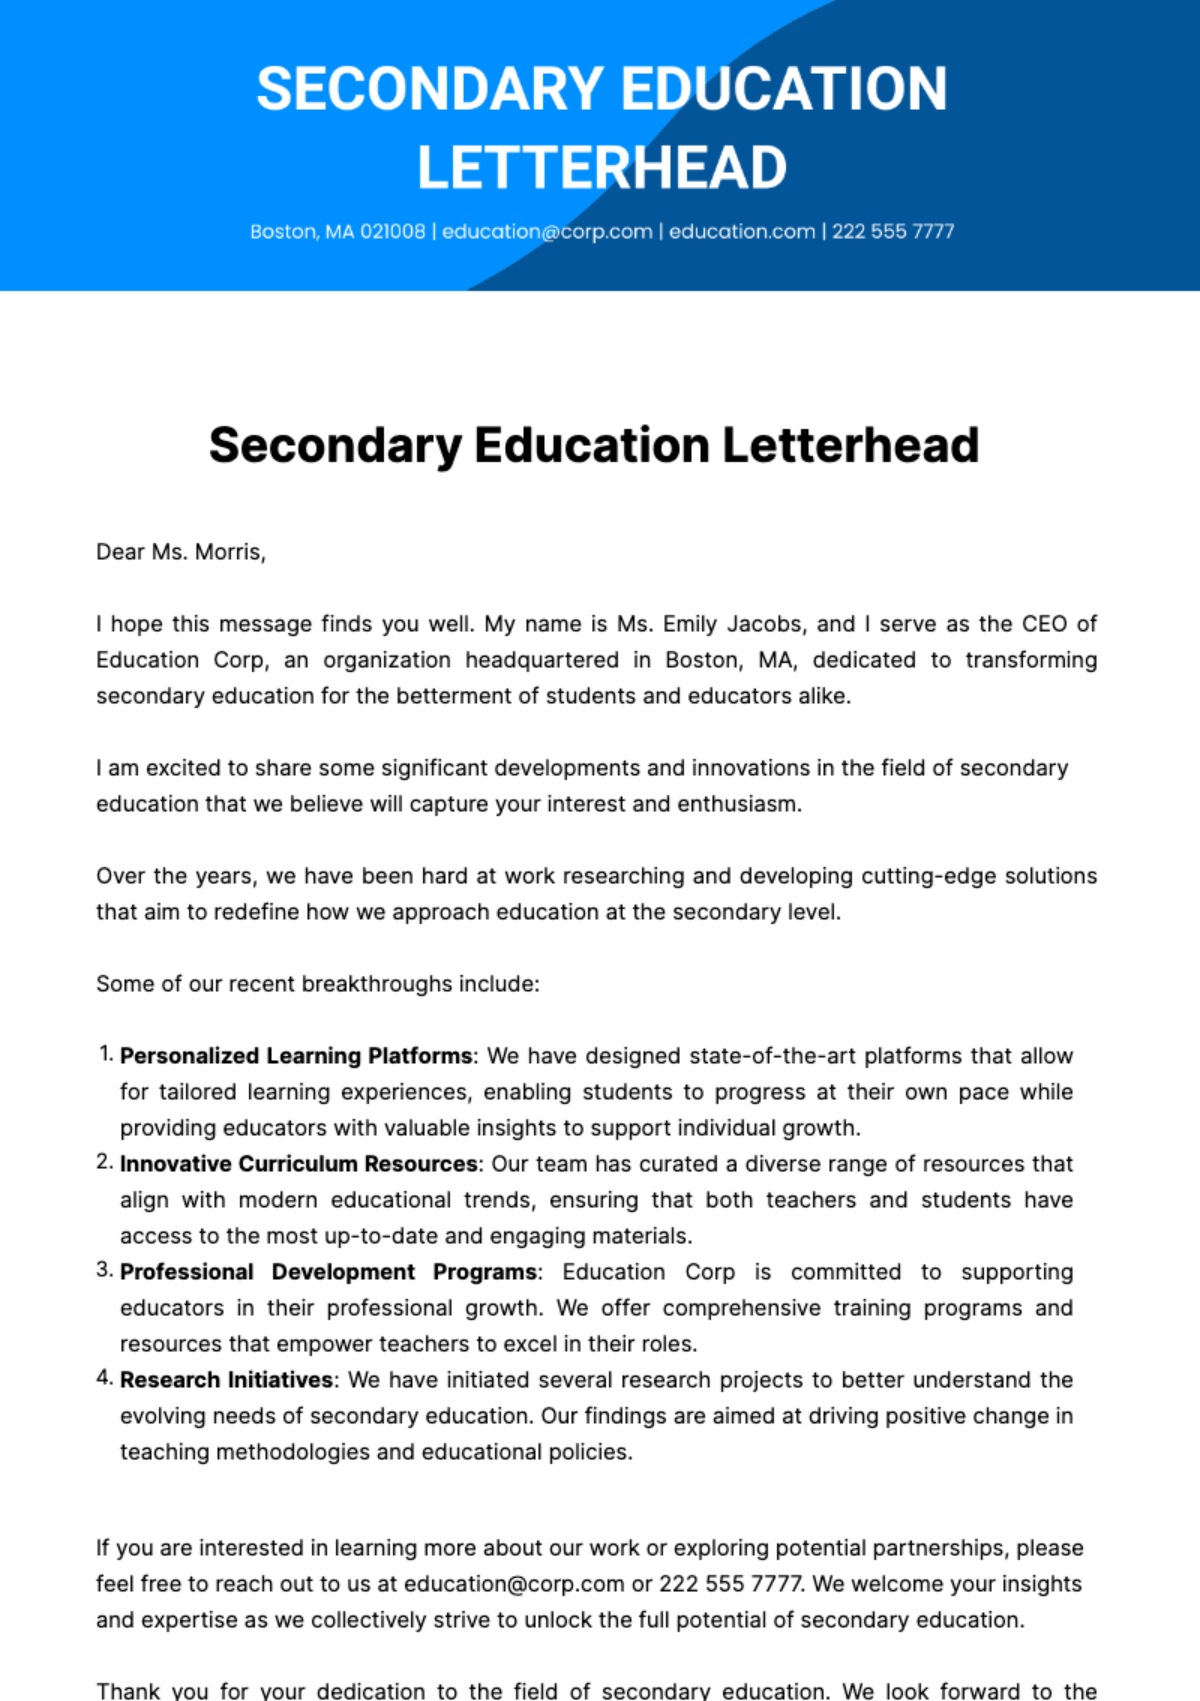 Free Secondary Education Letterhead Template